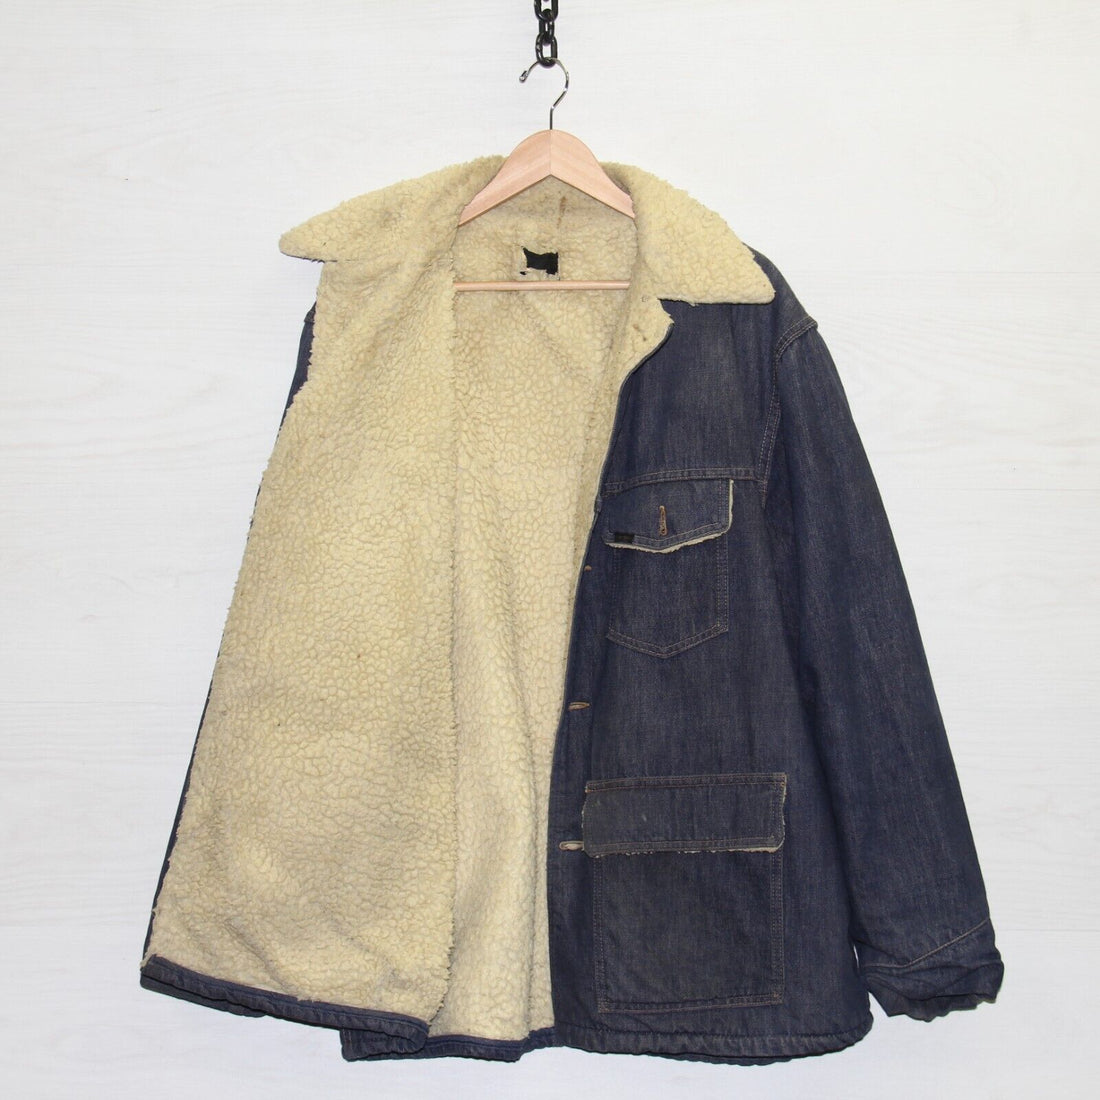 Vintage Sears Roebuck Denim Chore Coat Jacket Sz 50 XL Indigo Blue Sherpa Lined